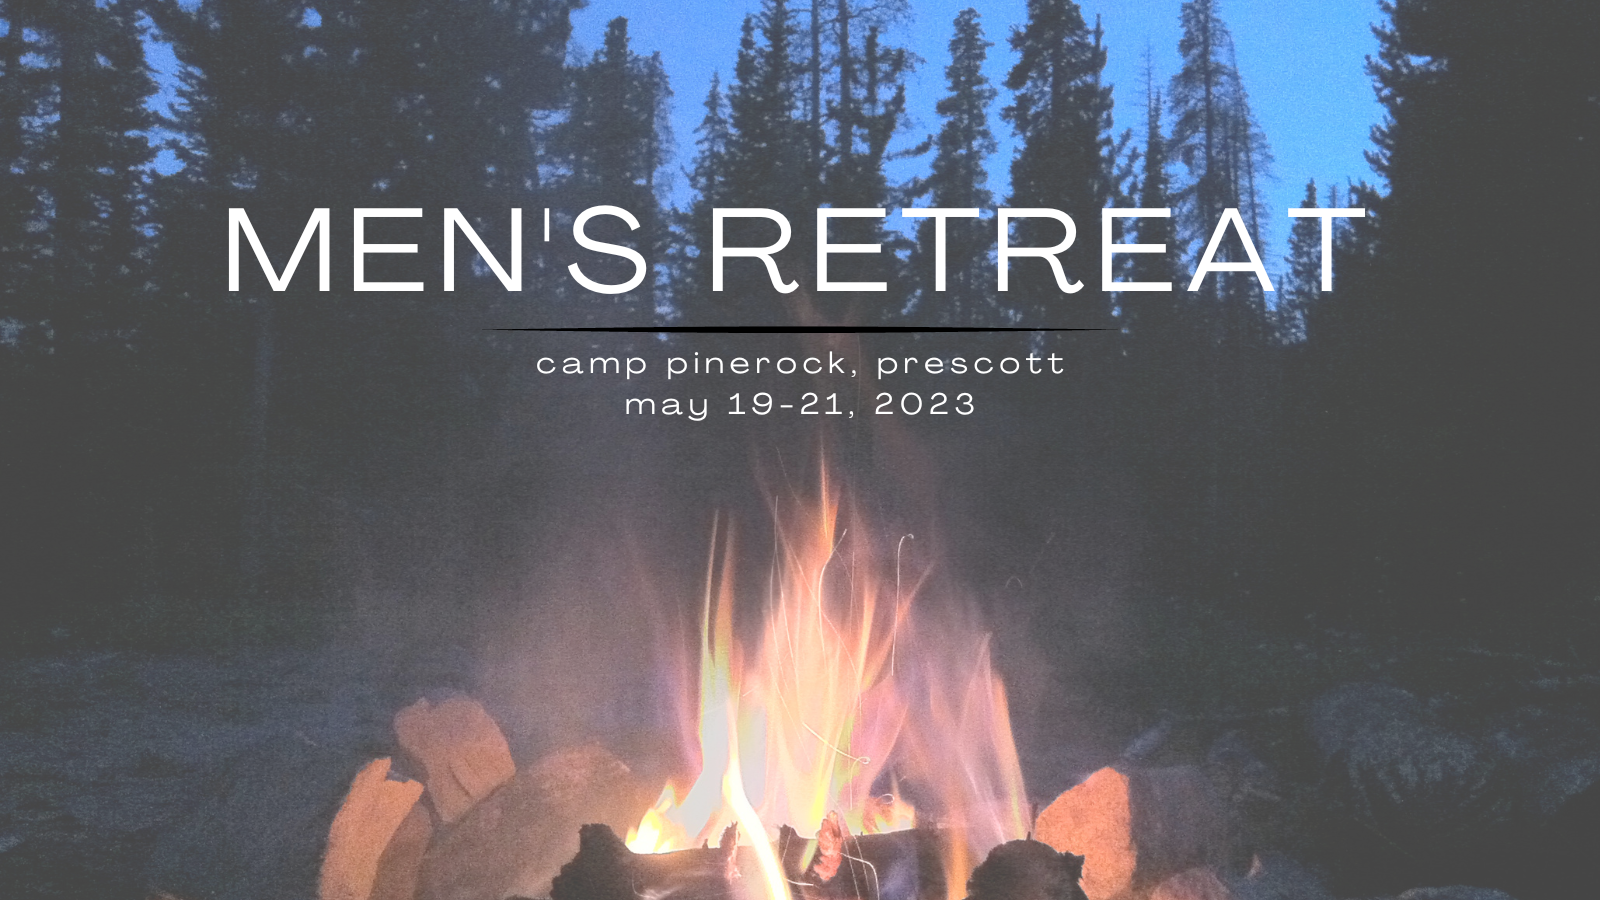 men's retreat 2023 image